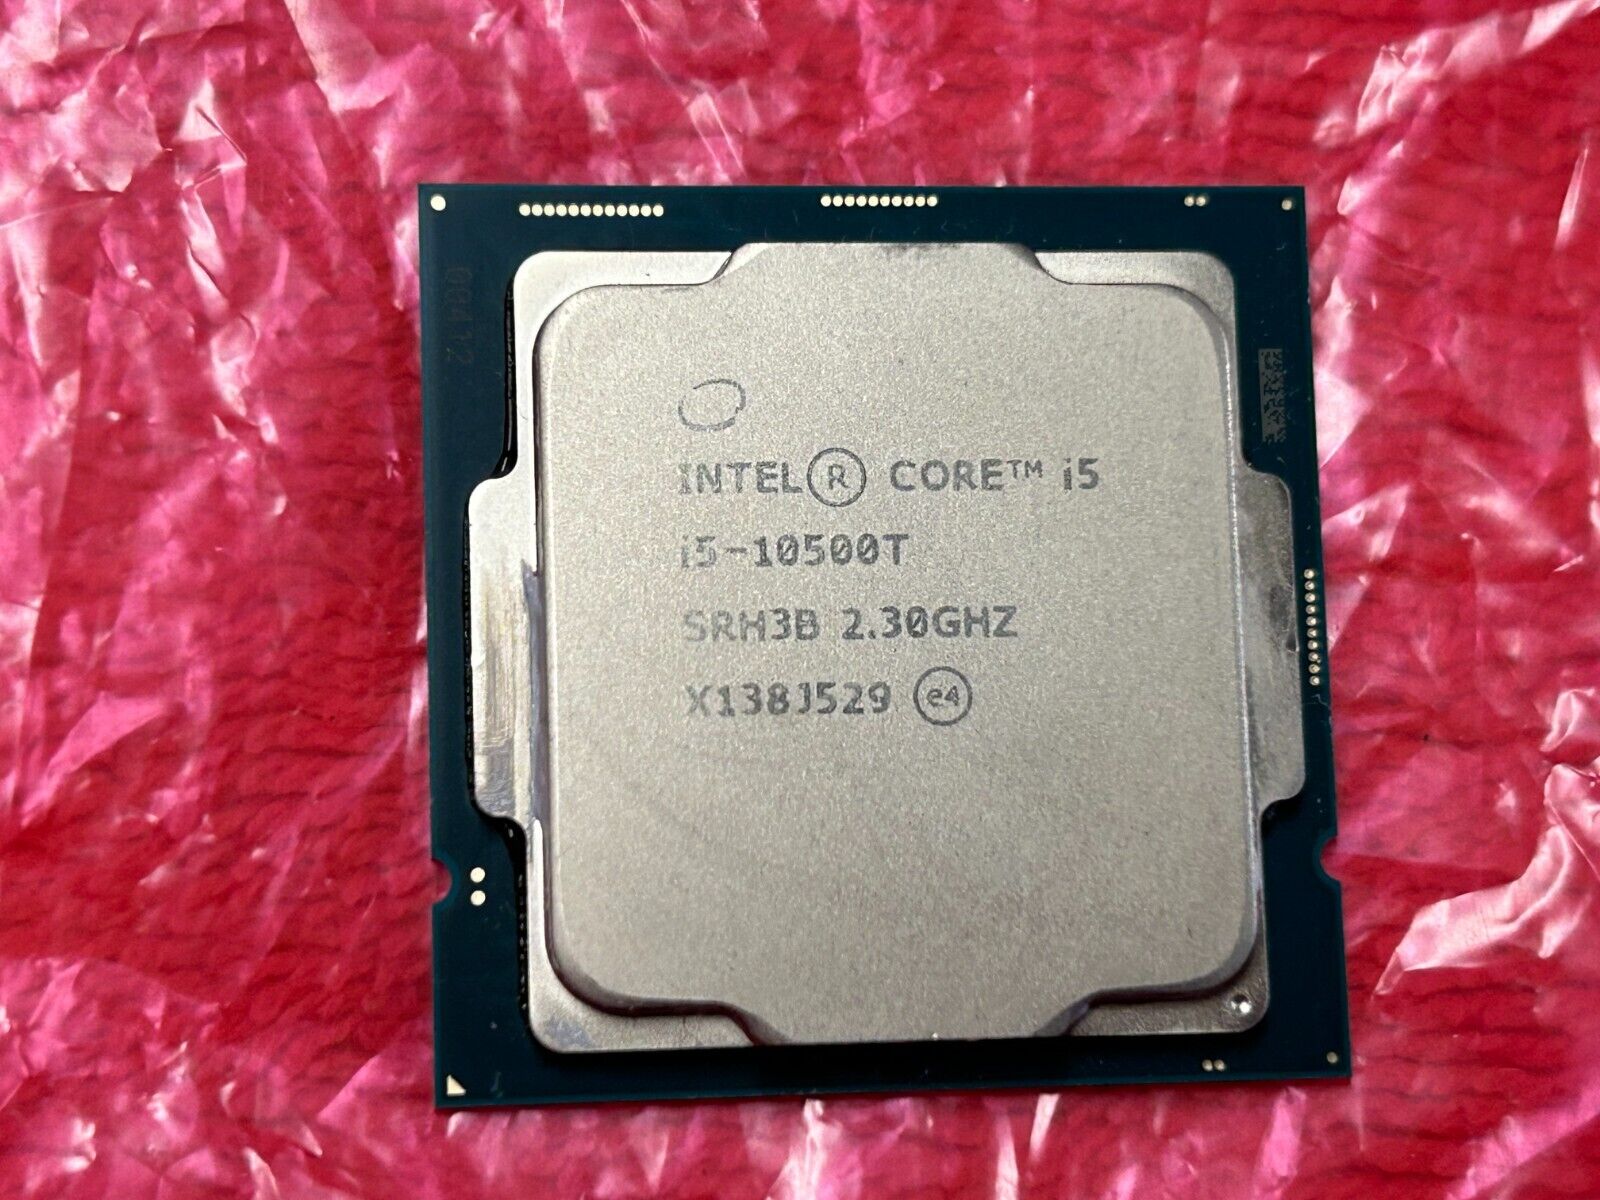 Intel Core i5-10500T - 2.3GHz Processor  Desktop Processor SRH3B